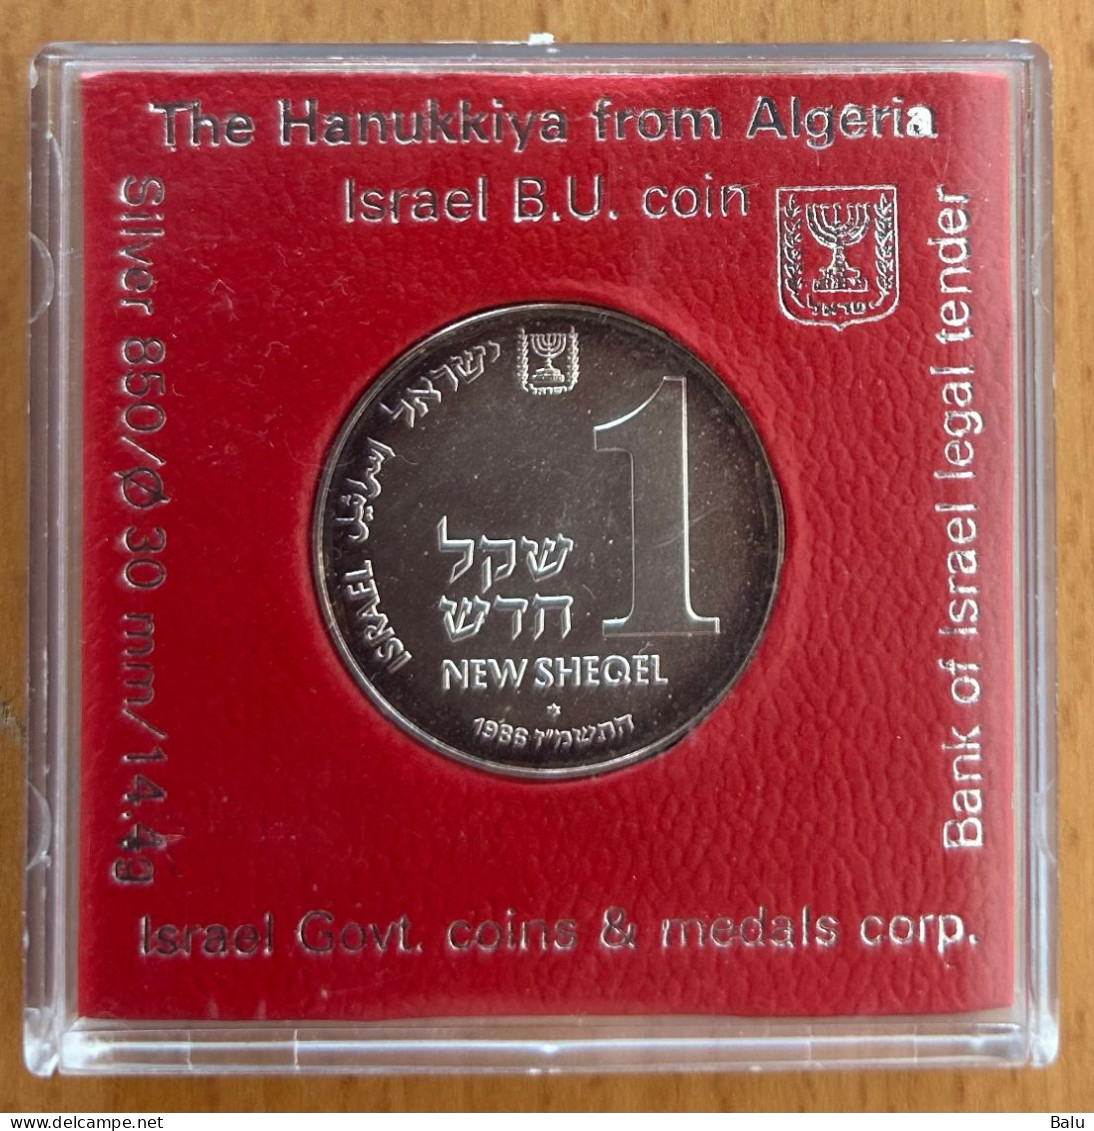 Israel 1987 Hanukkiya Algeria B.U. Coin 1 New Sheqel, Silber 850, 30mm, 14,4 G. Chanukkiya/Lampe Aus Algerien - Israel